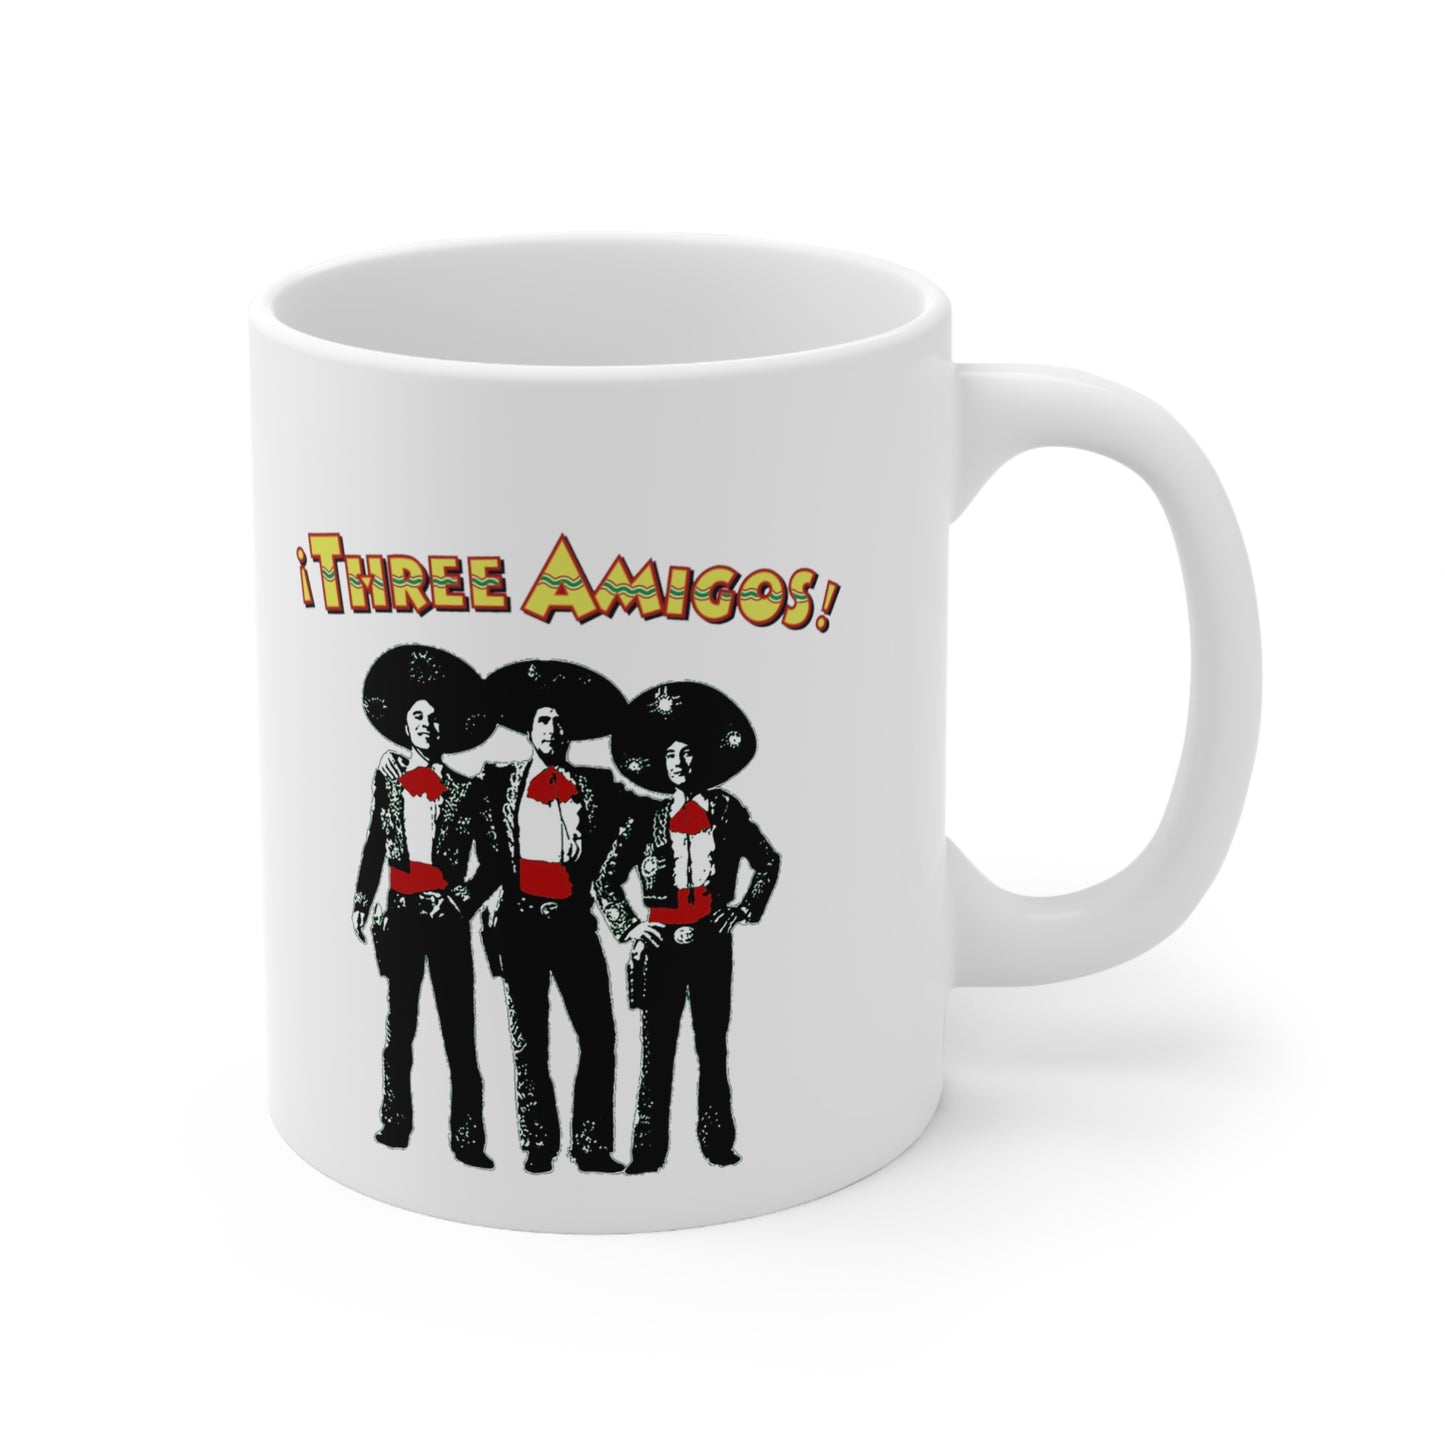 The Three Amigos! Ceramic Coffee Mug 11oz